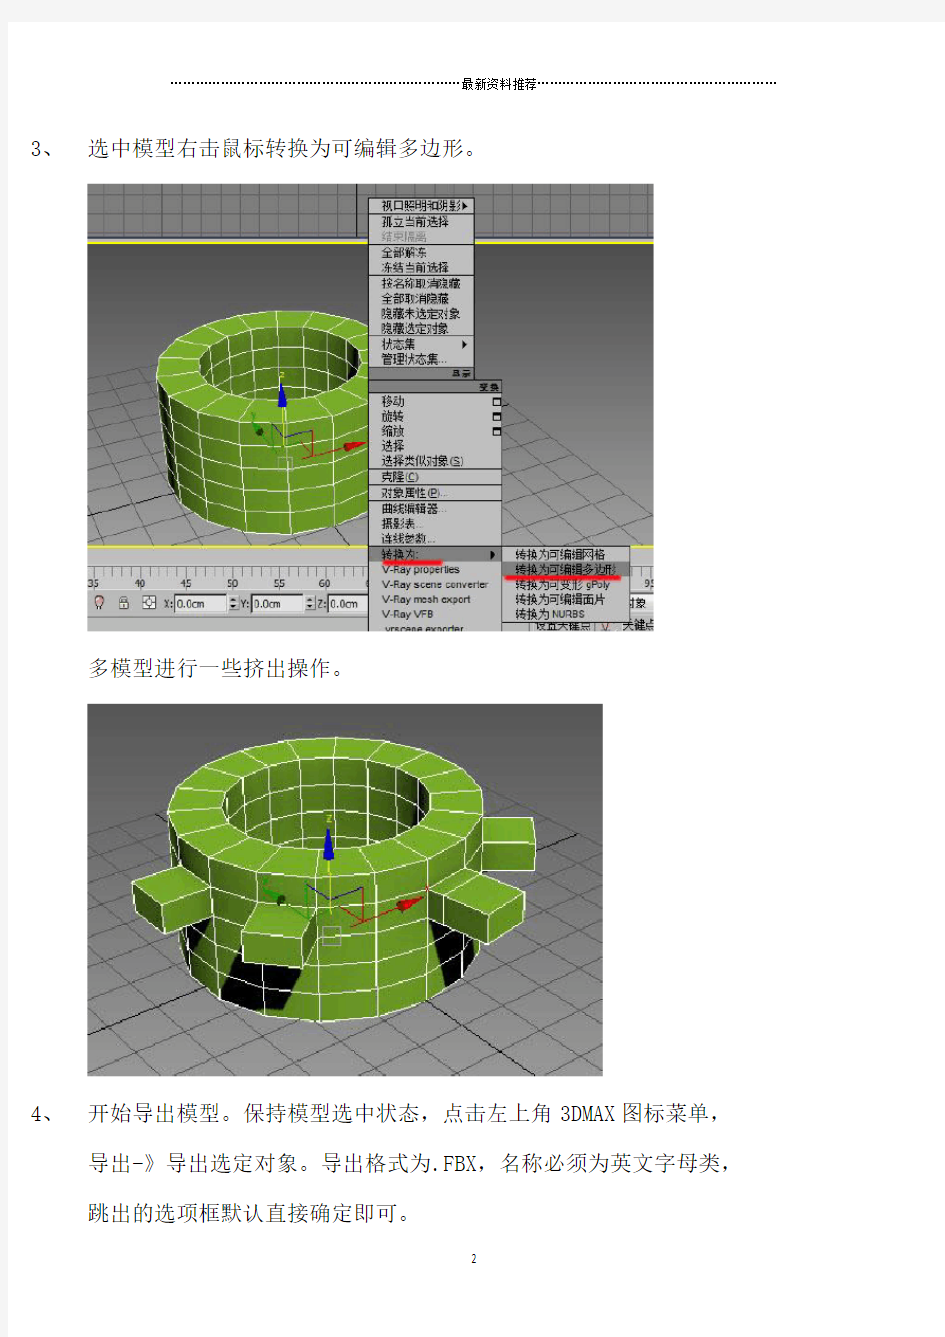 3DMAX模型导入到Unity3D的步骤(3DMAX系统单位为cm最好)精编版